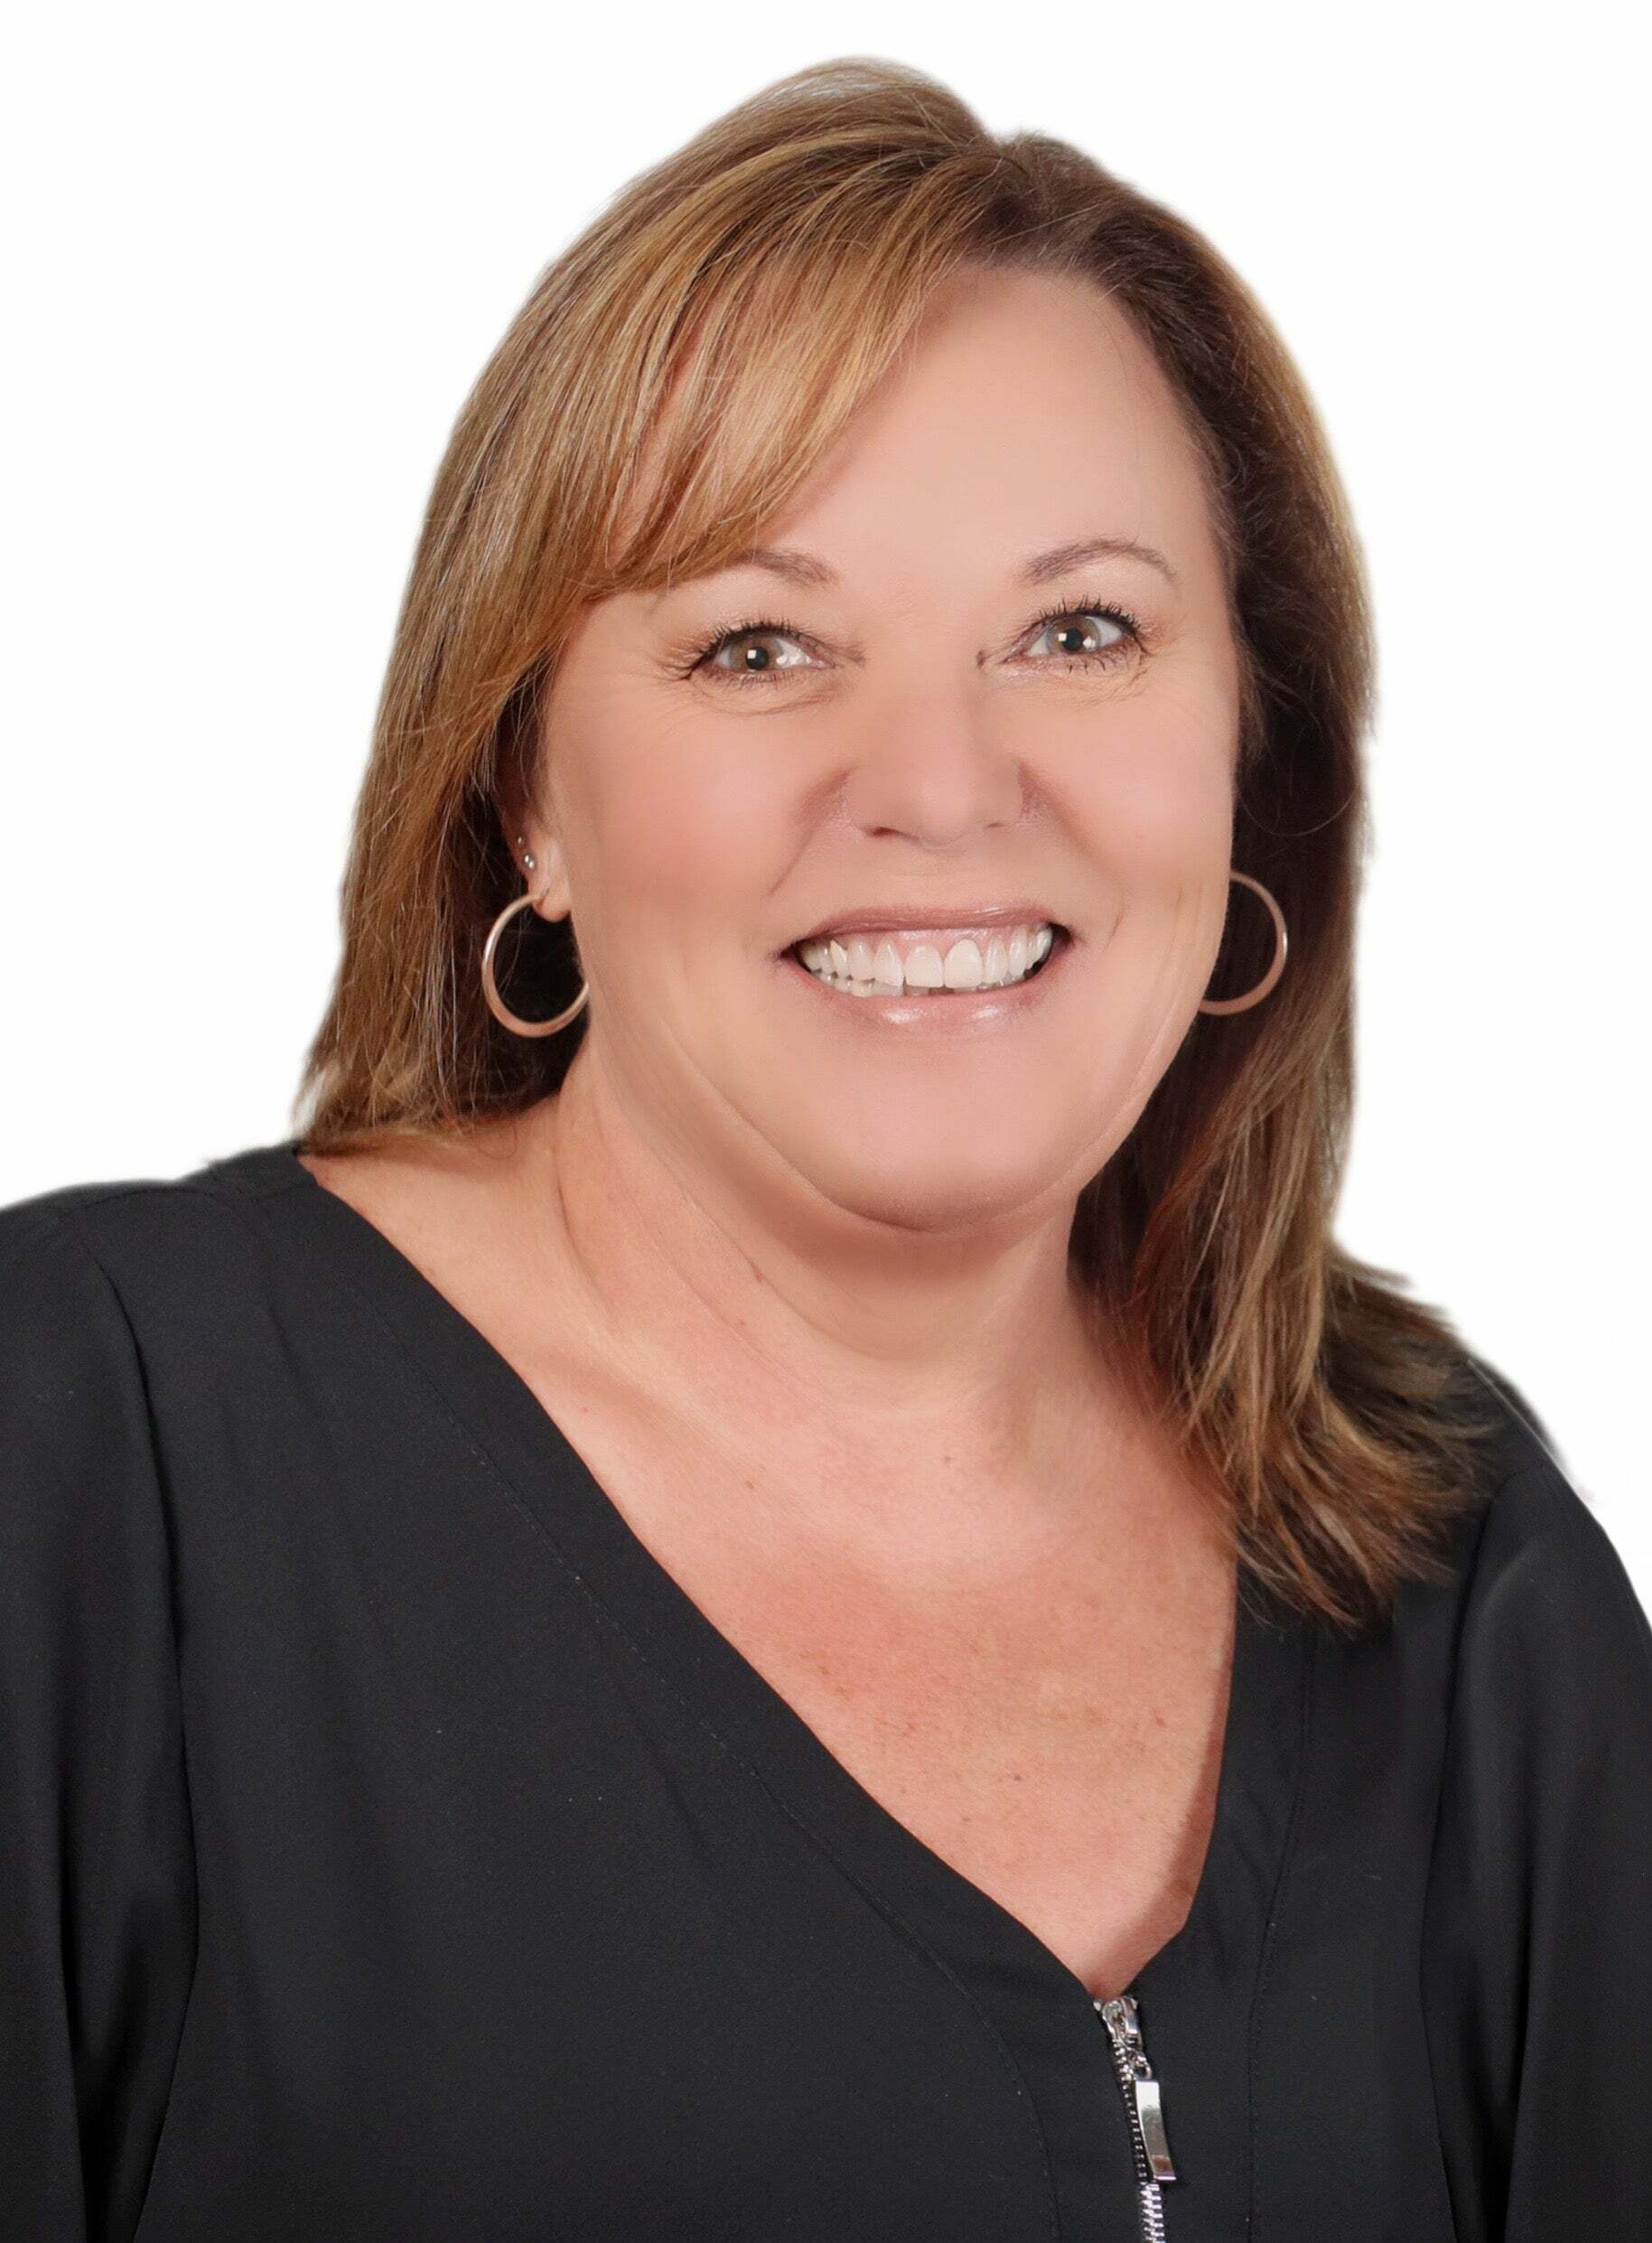 Kimberly Ouellette, Real Estate Salesperson in Carver, Tassinari & Associates, Inc